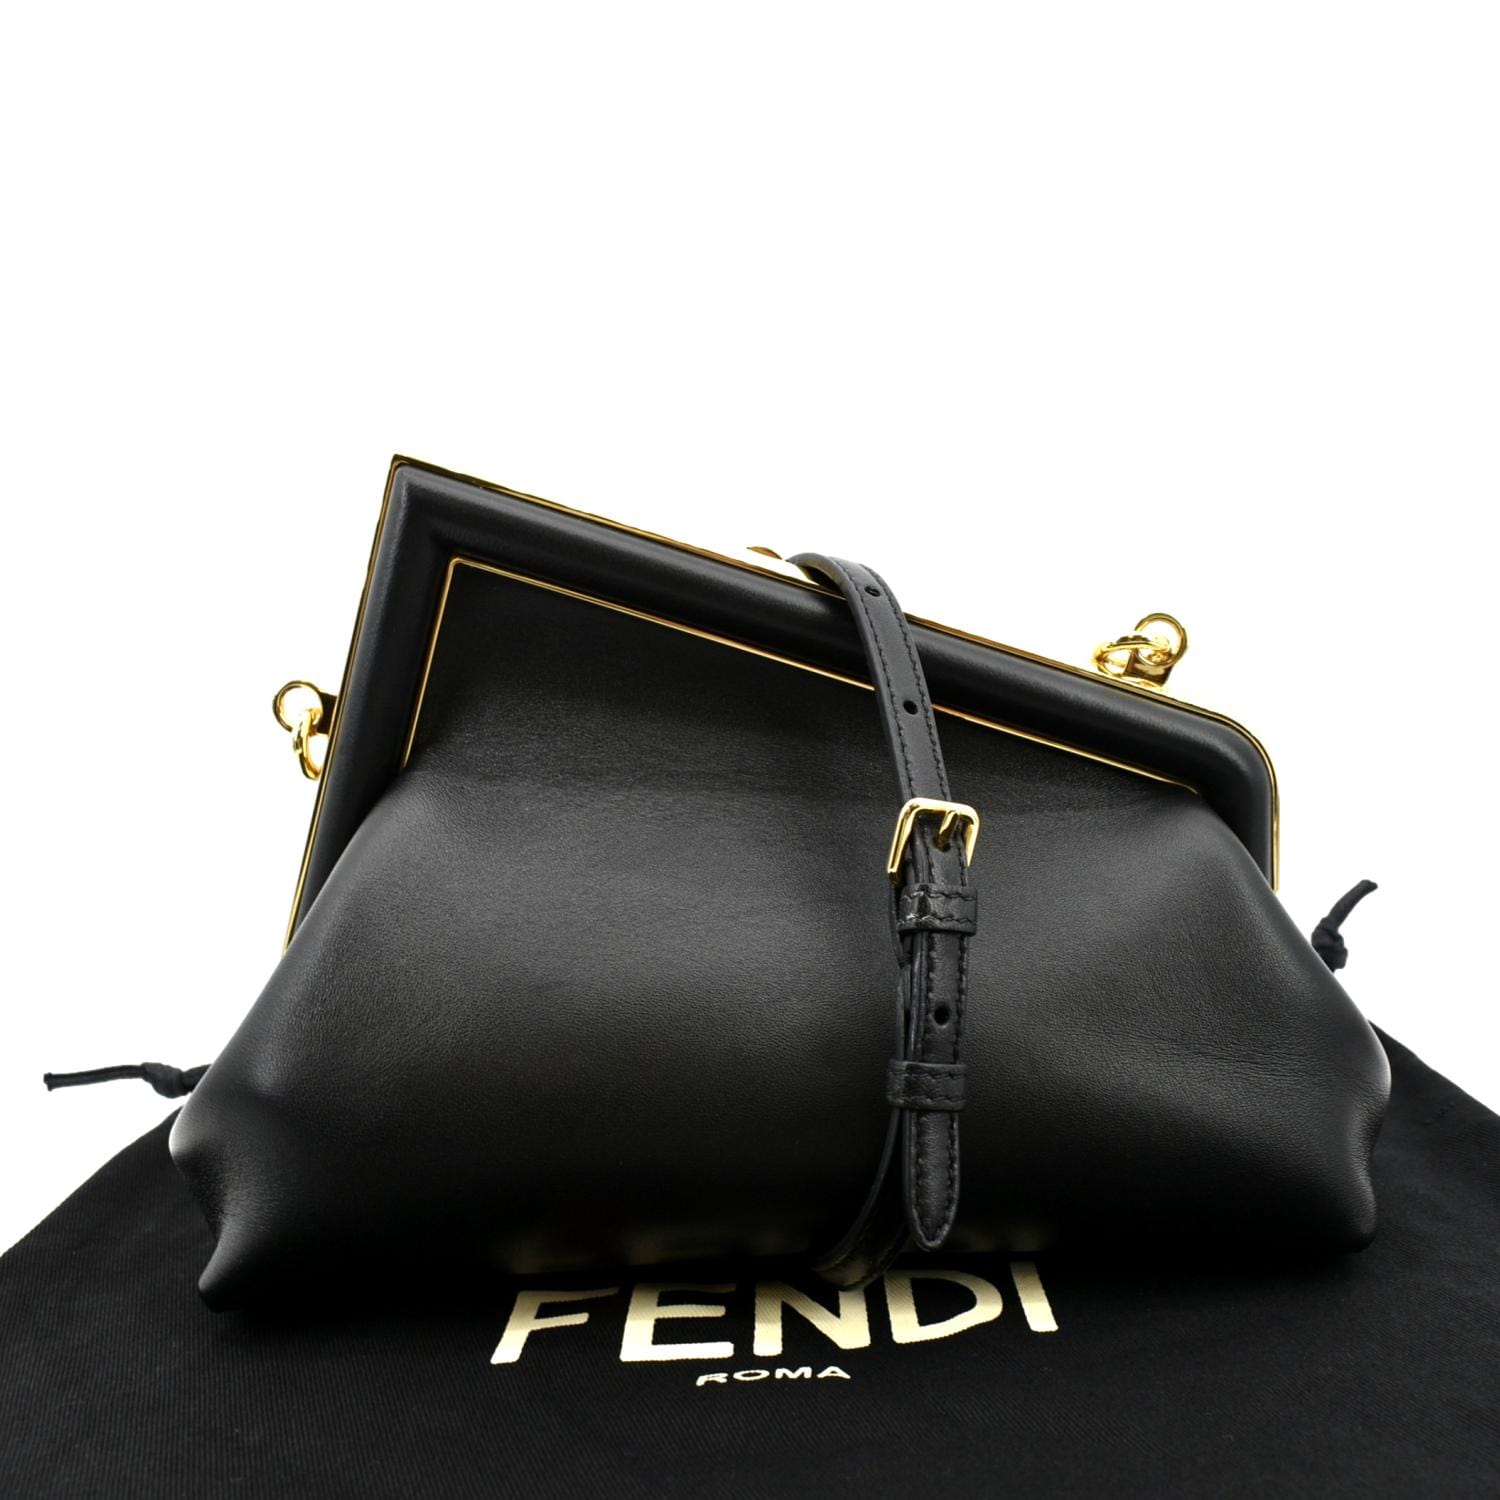 FENDI First Small Bag in Black